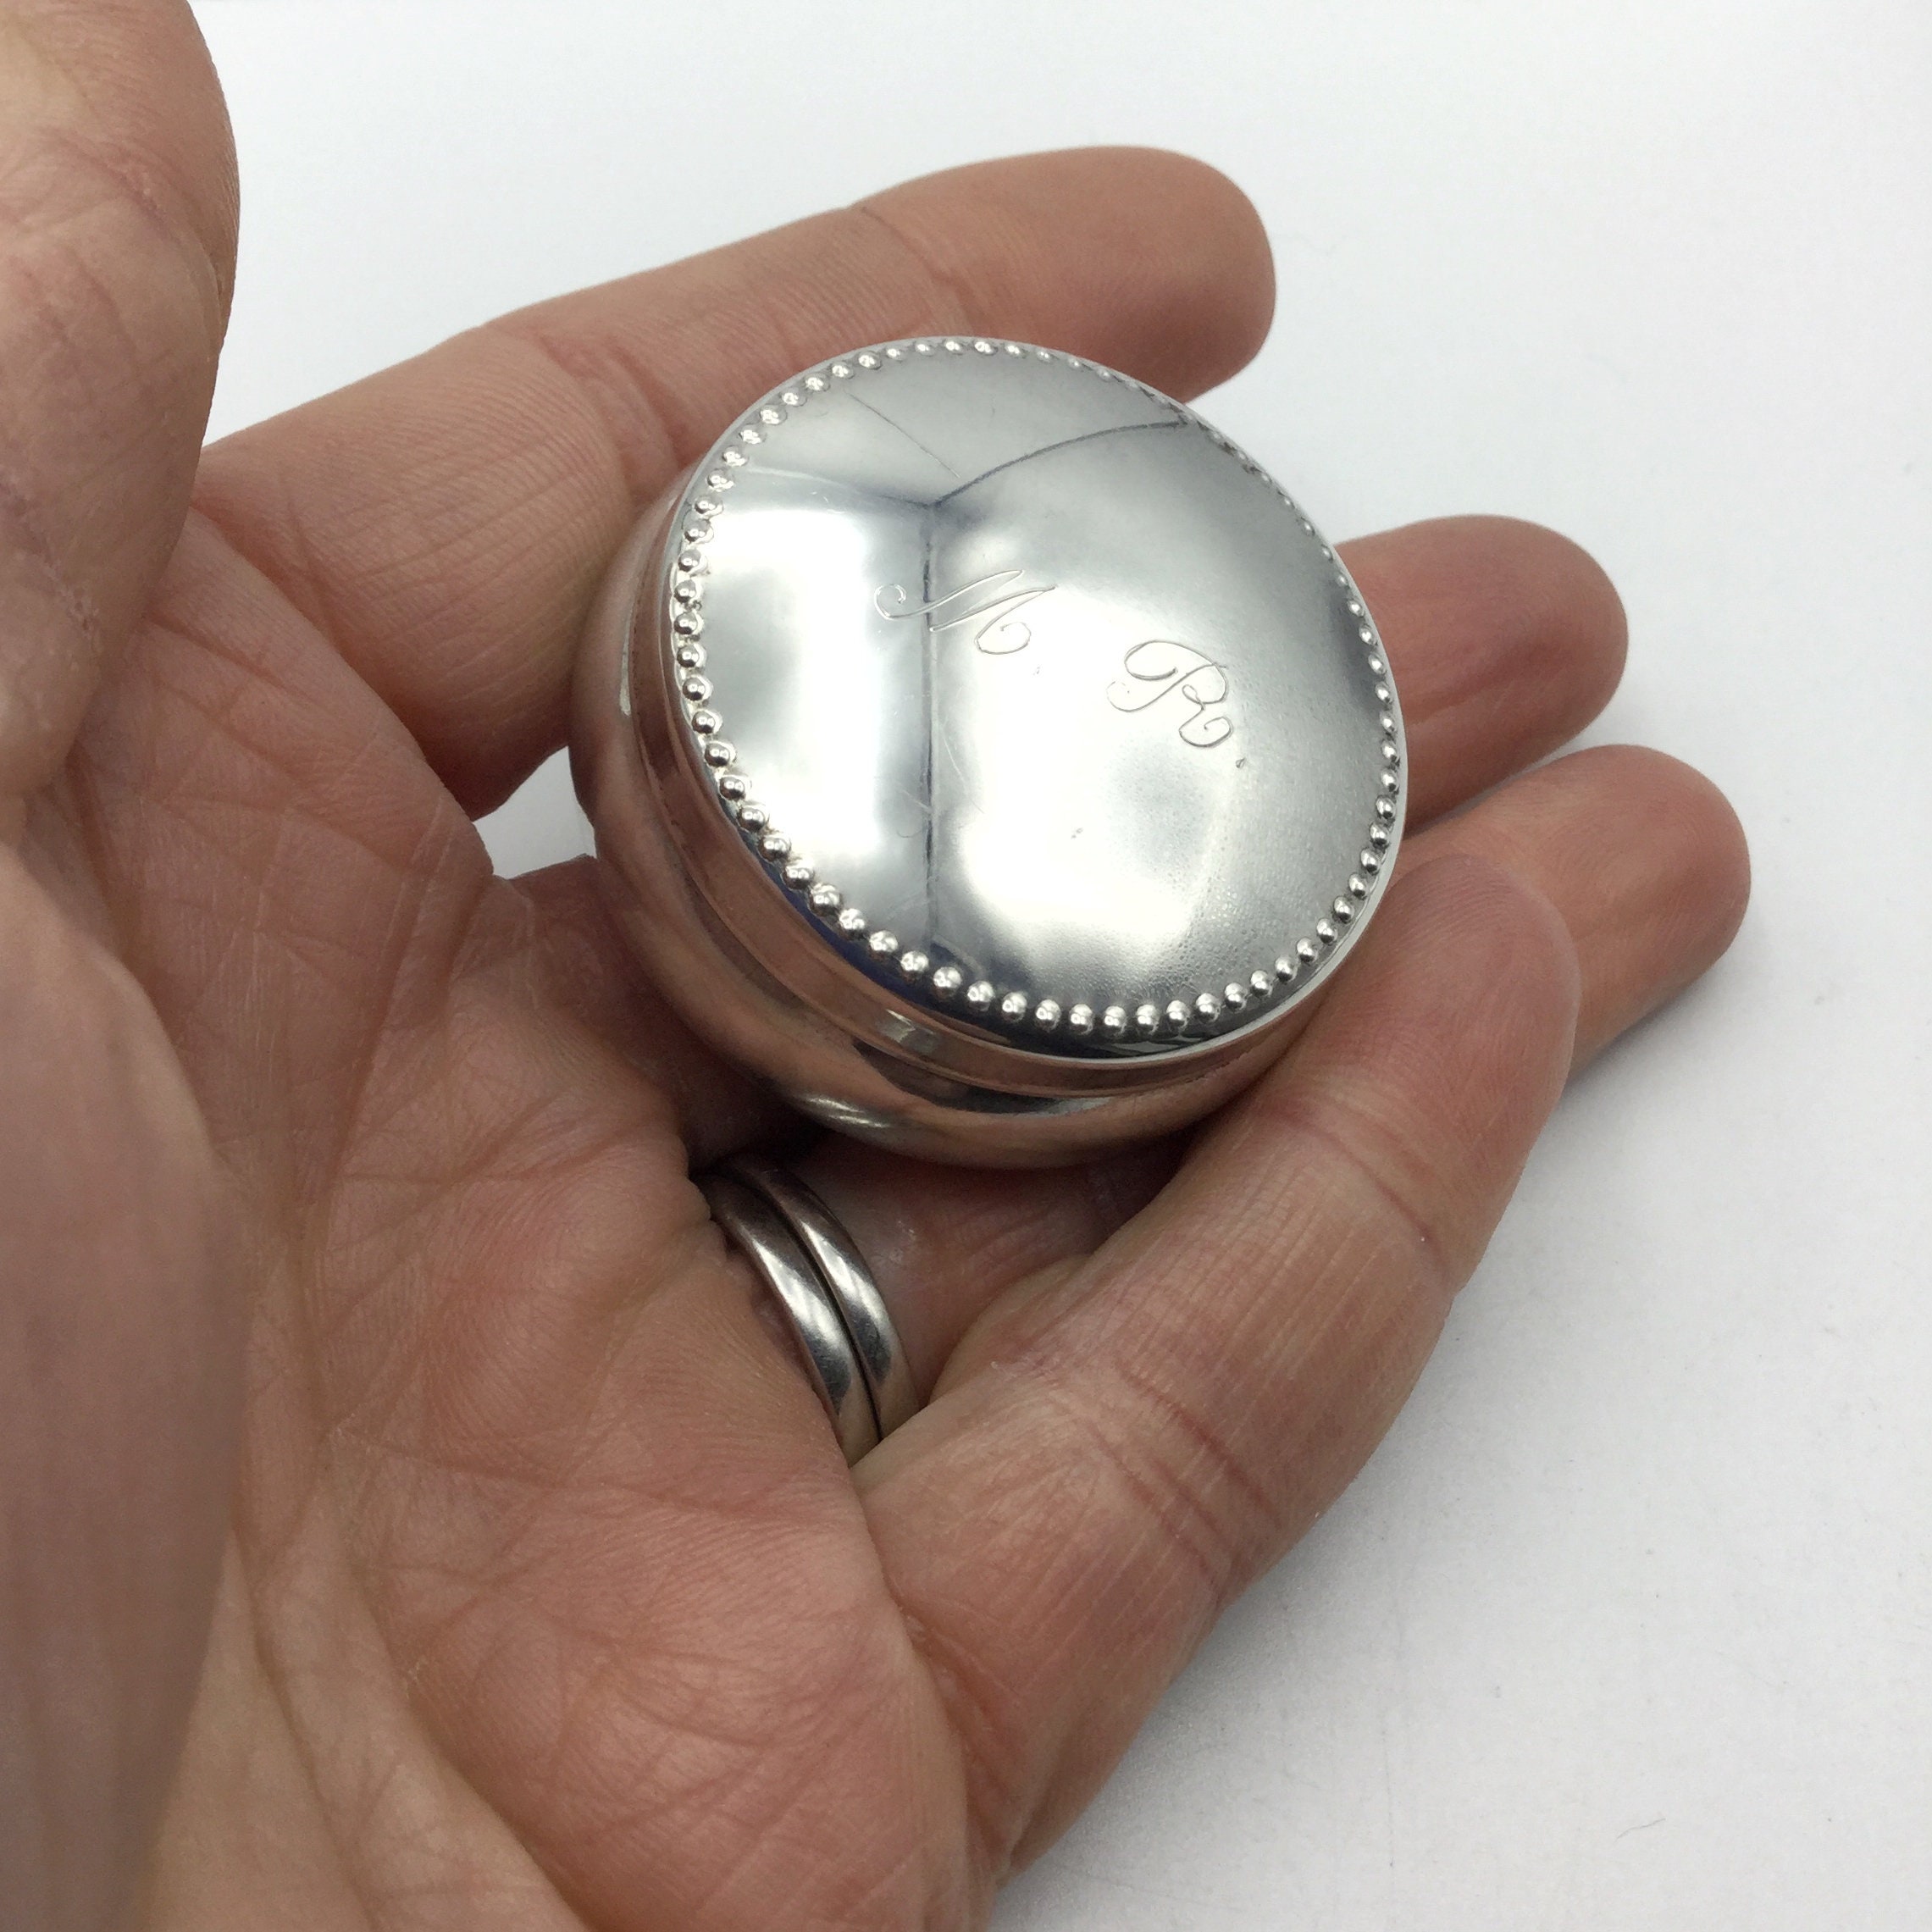 NL Signature Round Pill Case, Compact Circle Pill Box - Silver